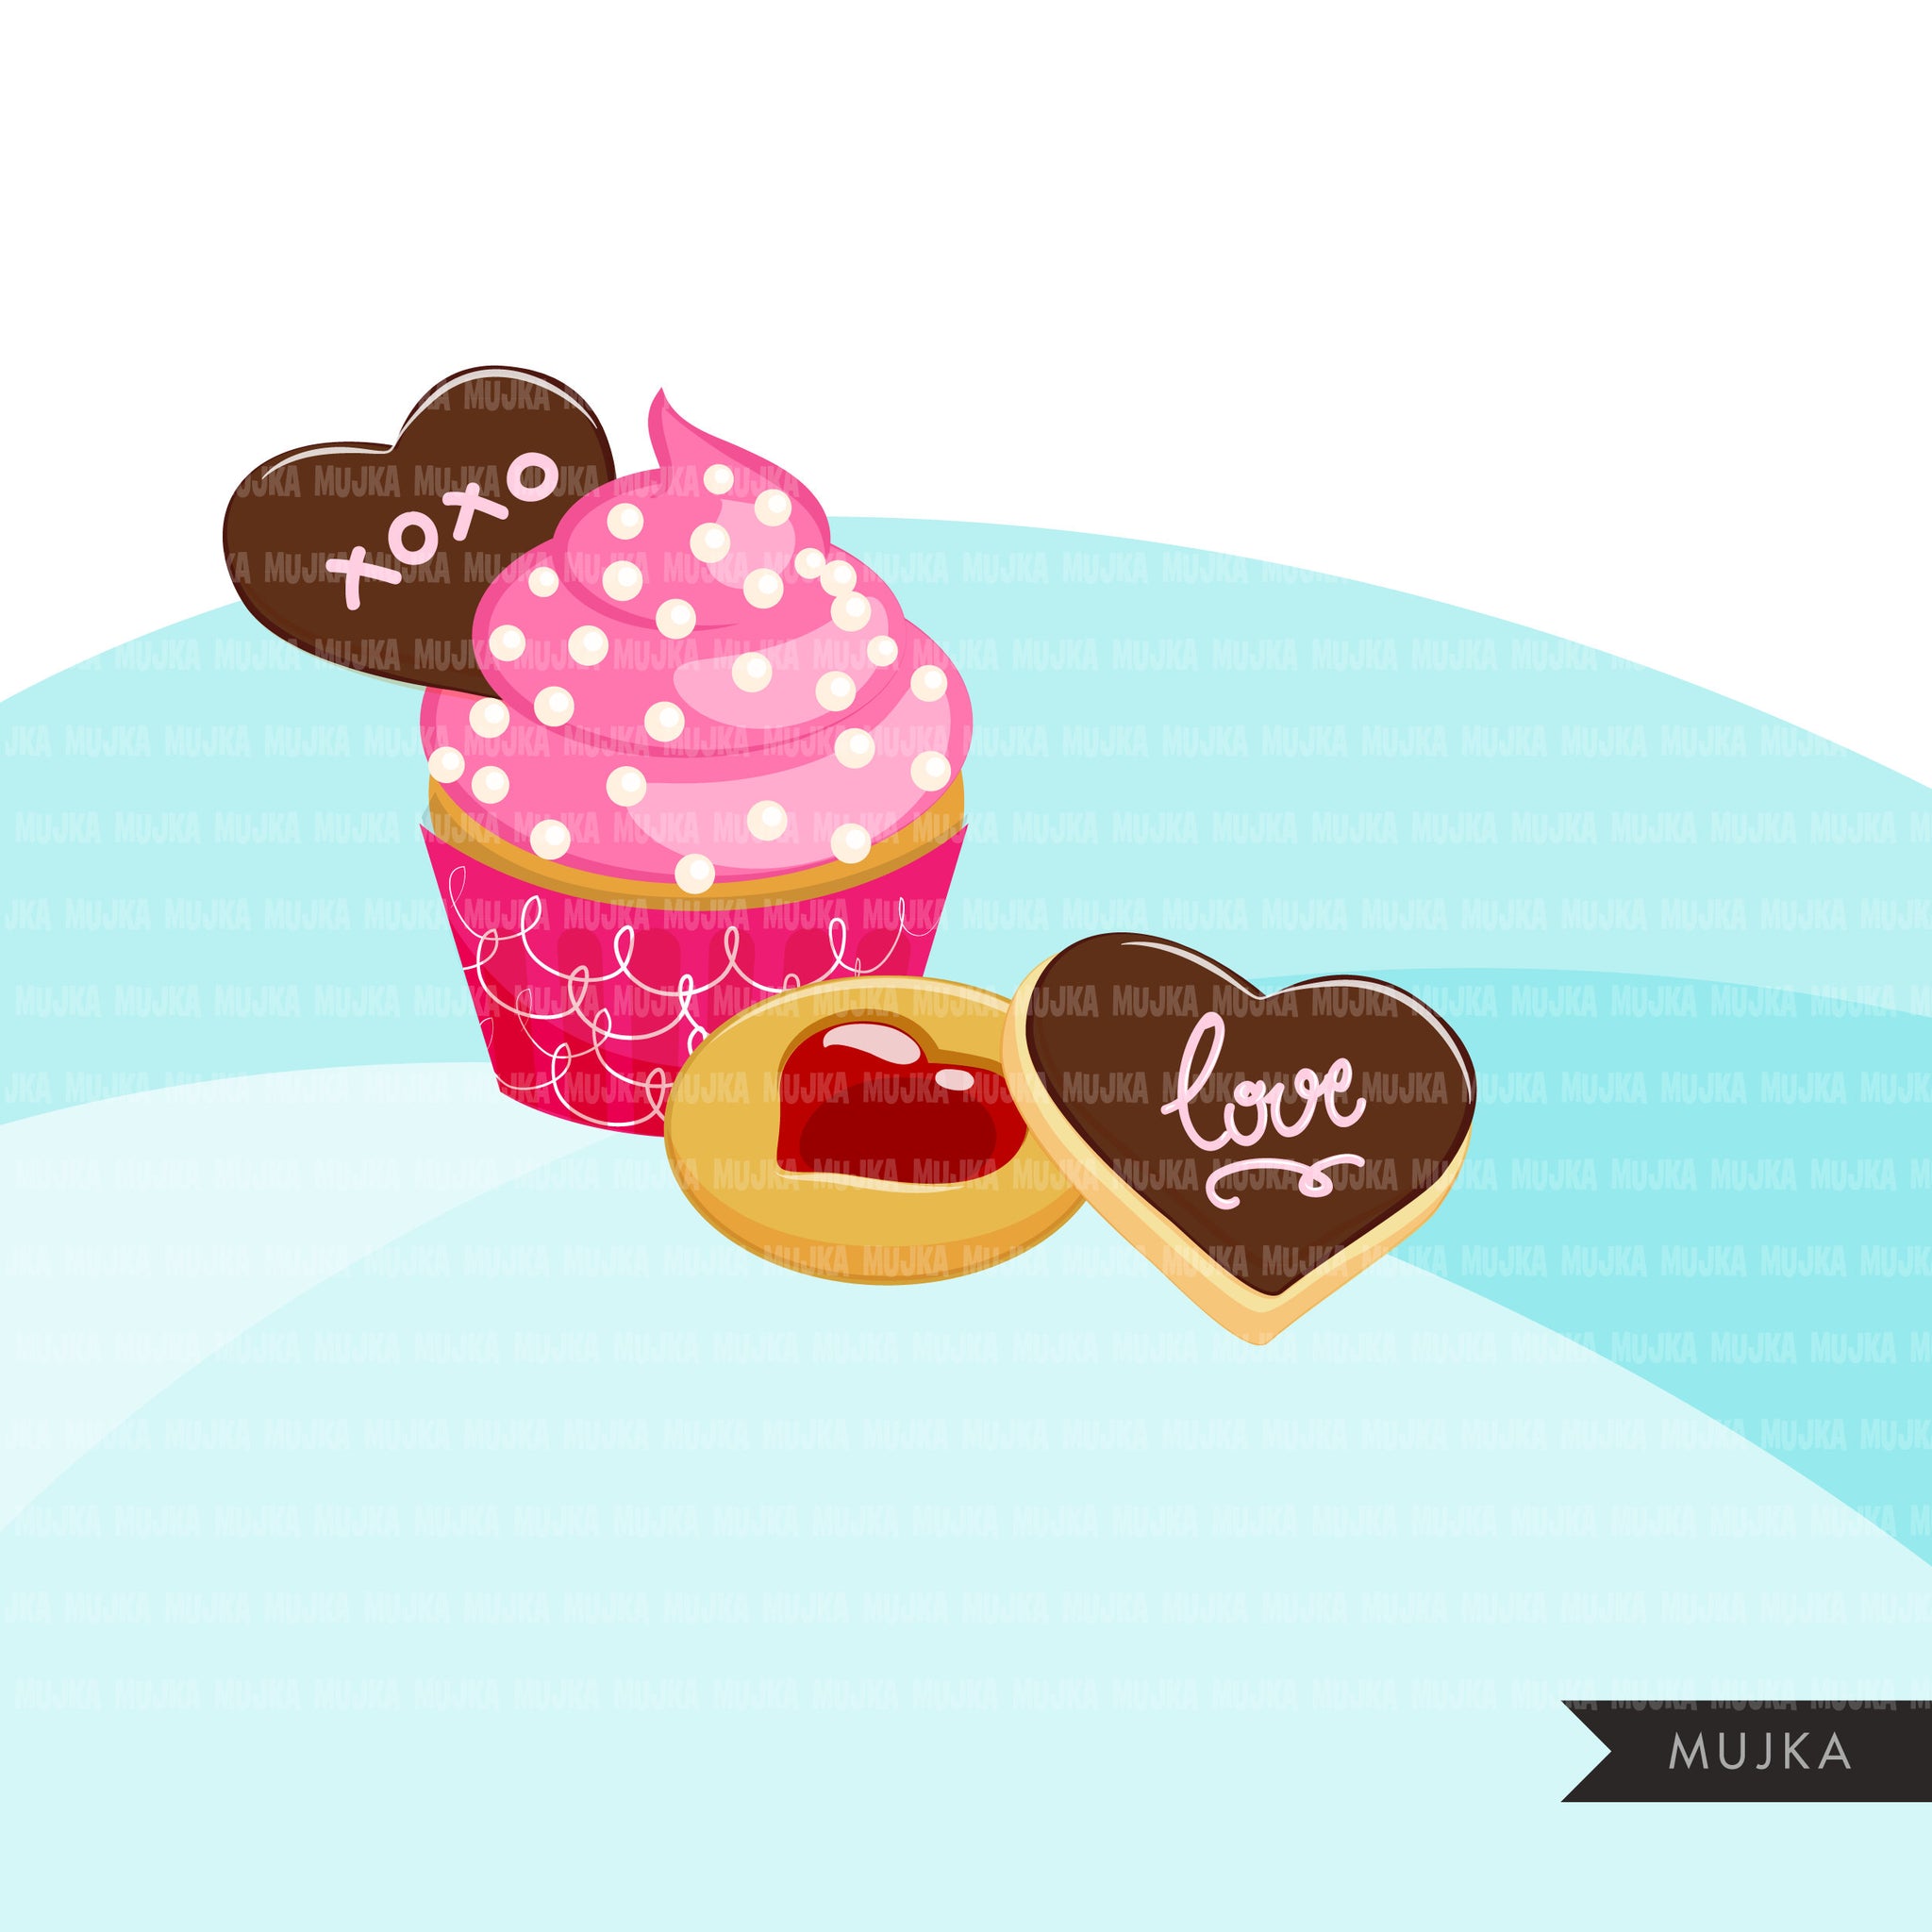 Clipart de doces do dia dos namorados, donuts, trufas, chocolate, biscoitos, biscoitos do dia dos namorados, png clip art